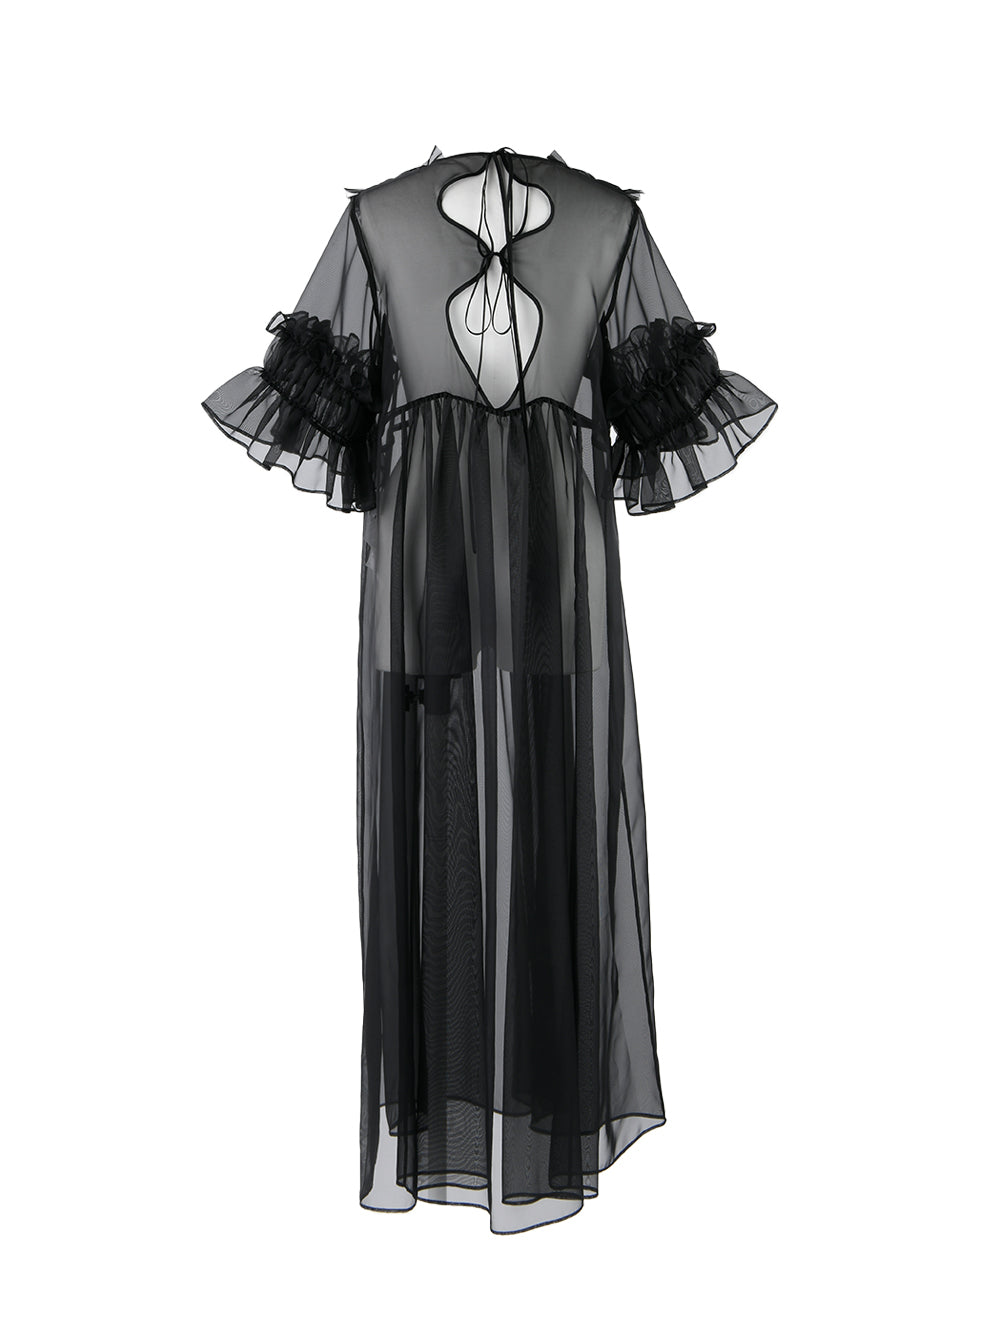 Melty Organdy Decorative Dress (Black)